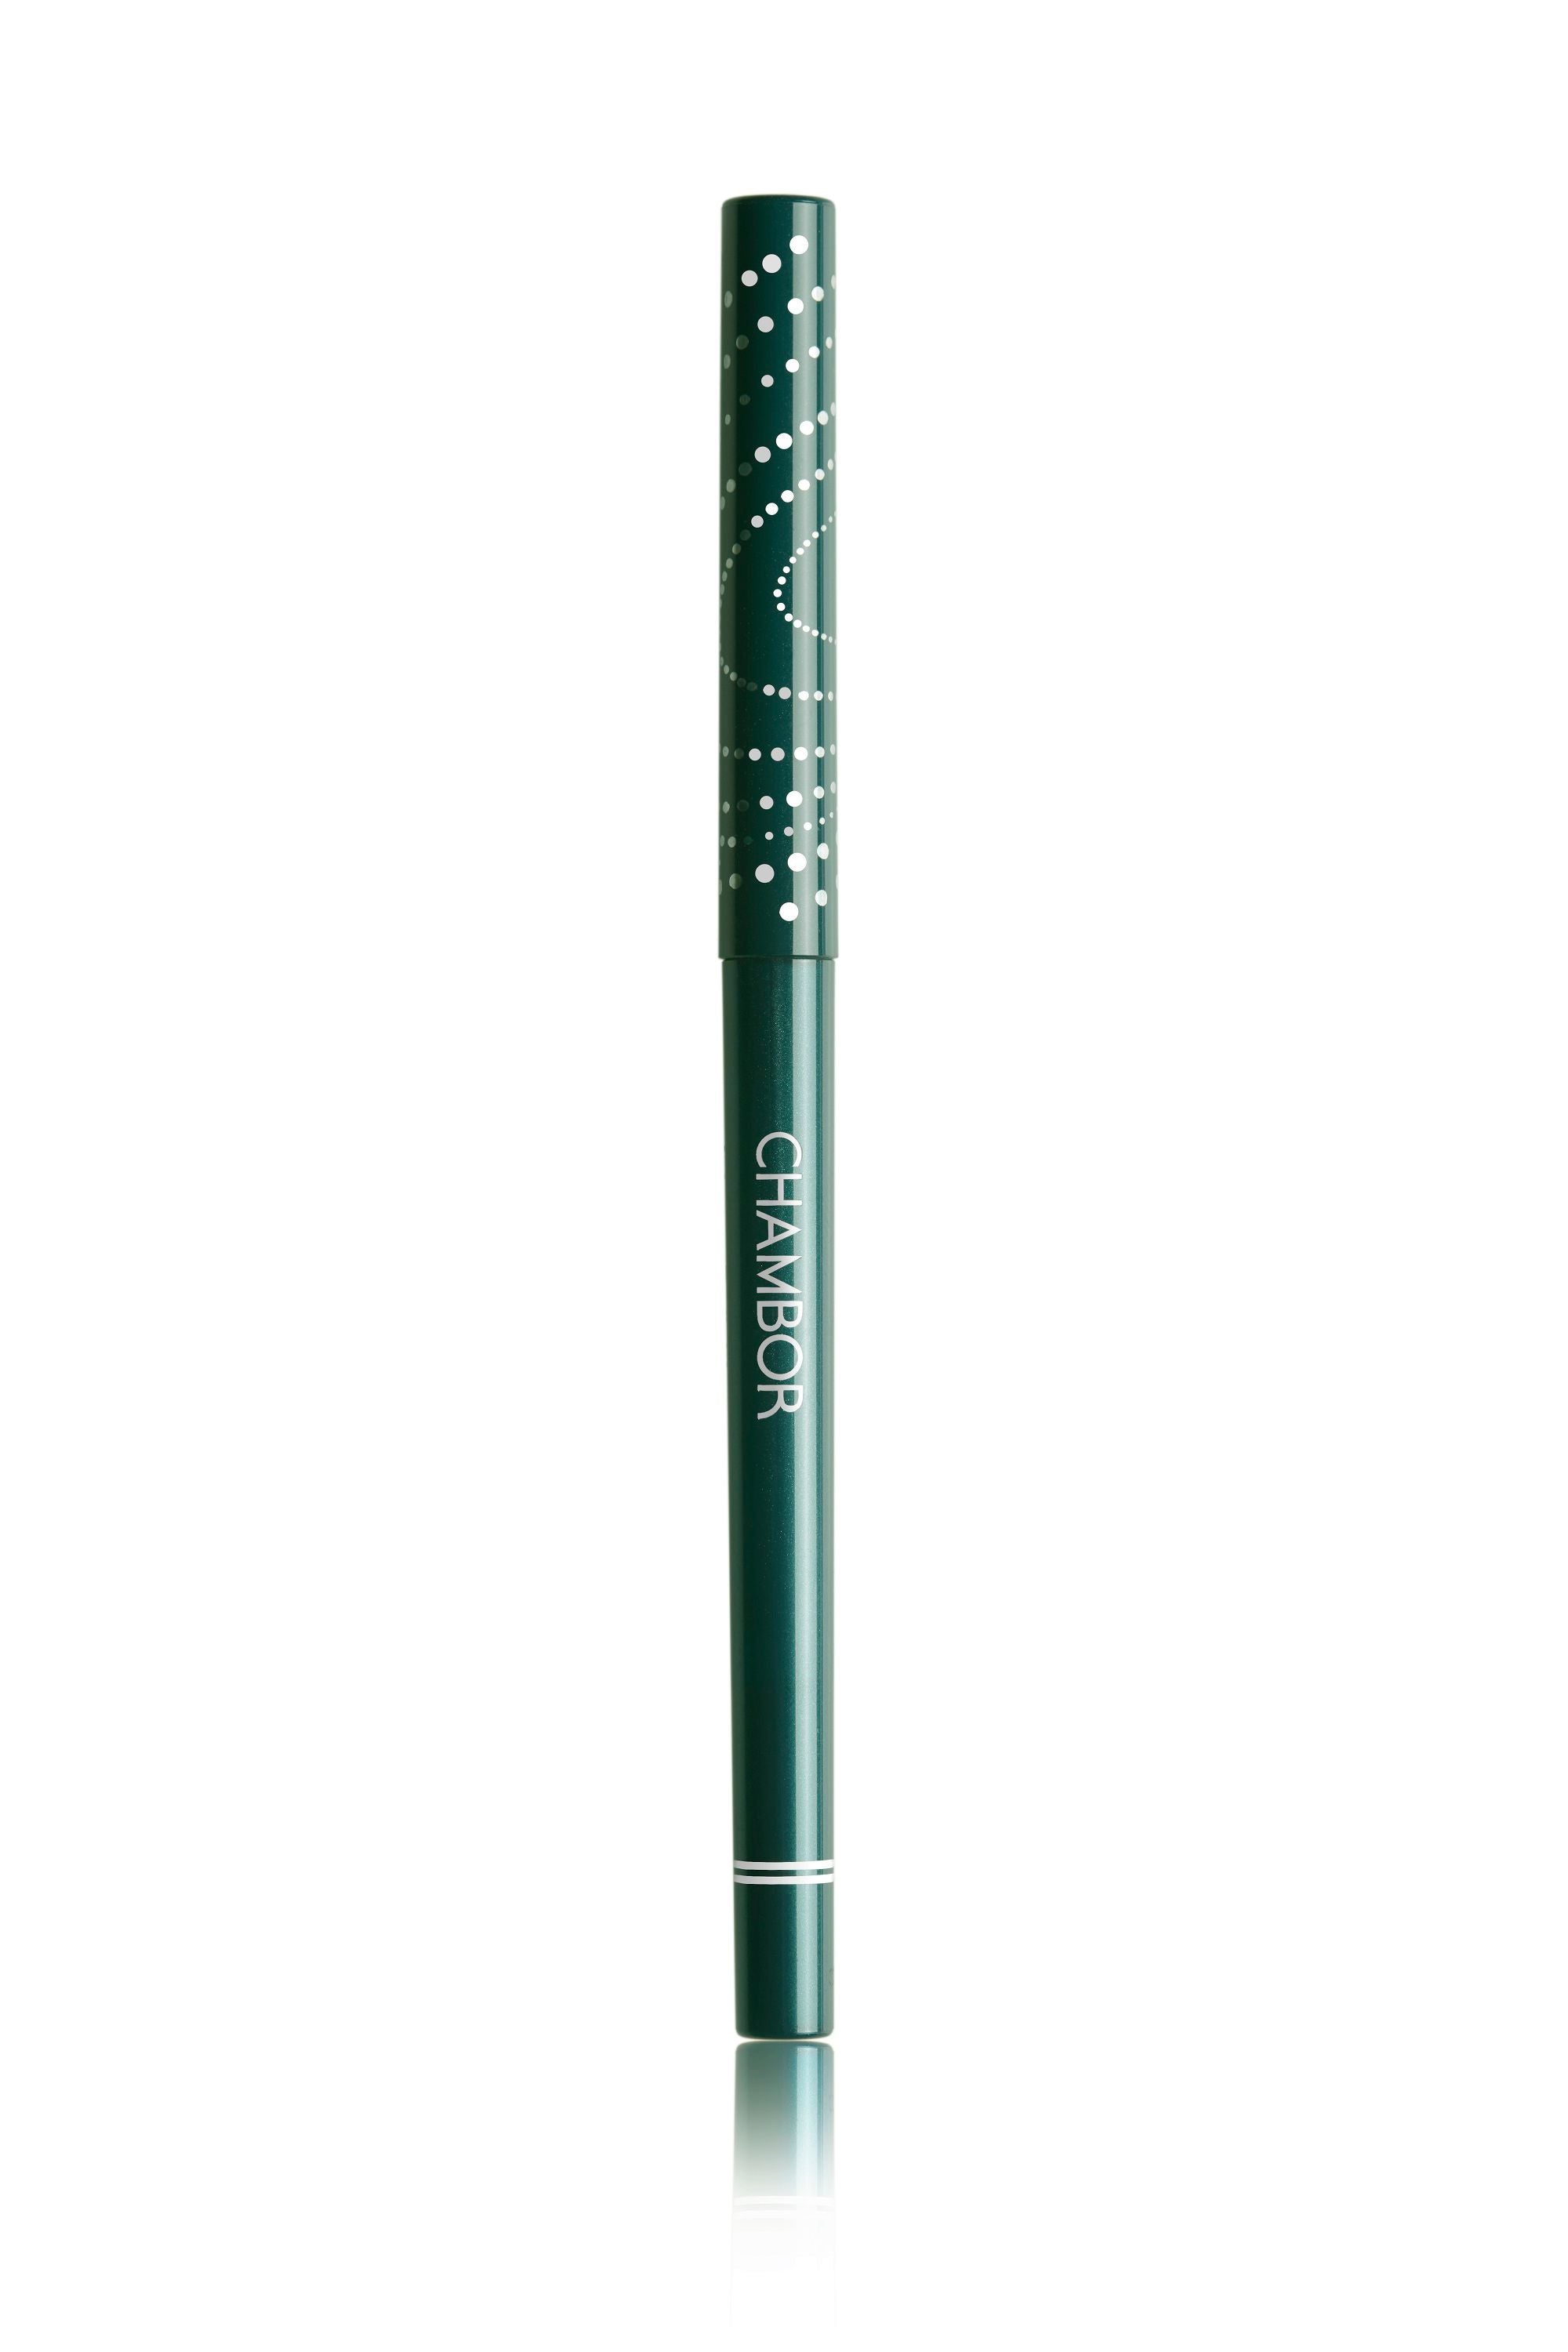 Chambor Geneva Intense Definition Gel Eye Liner Pencil (0.25g) Chambor Geneva